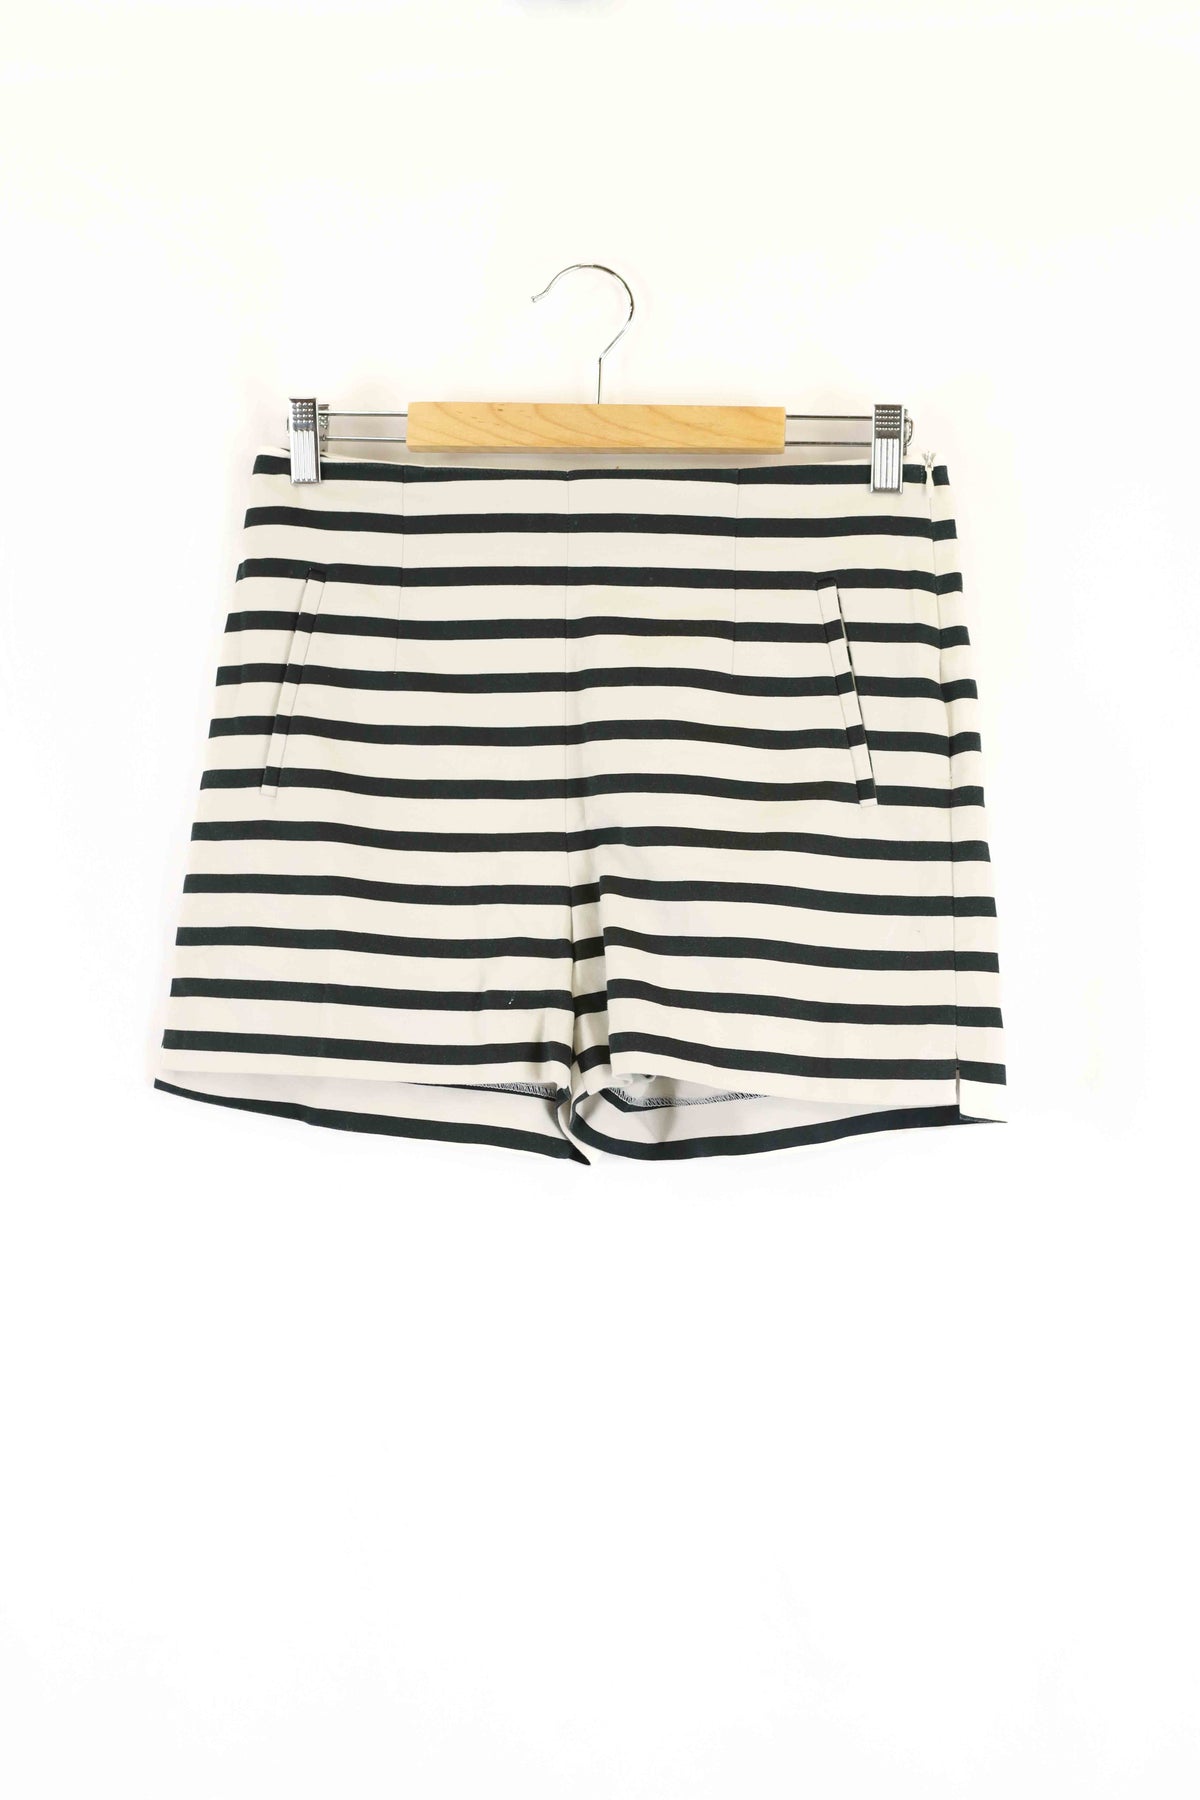 Zara Black White Stripe Shorts M